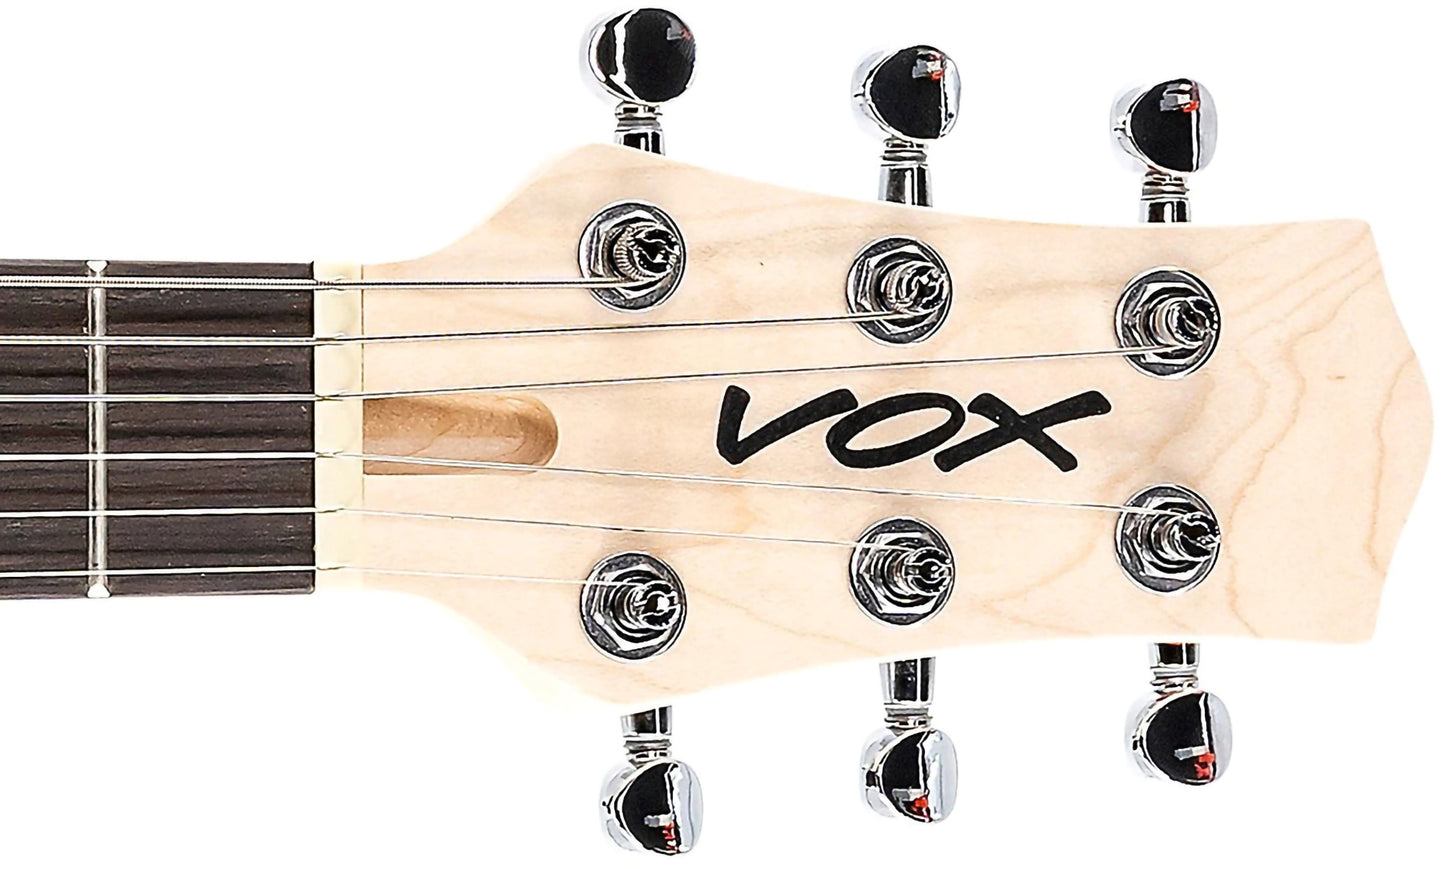 Vox SDC-1 Mini Electric Guitar in Black